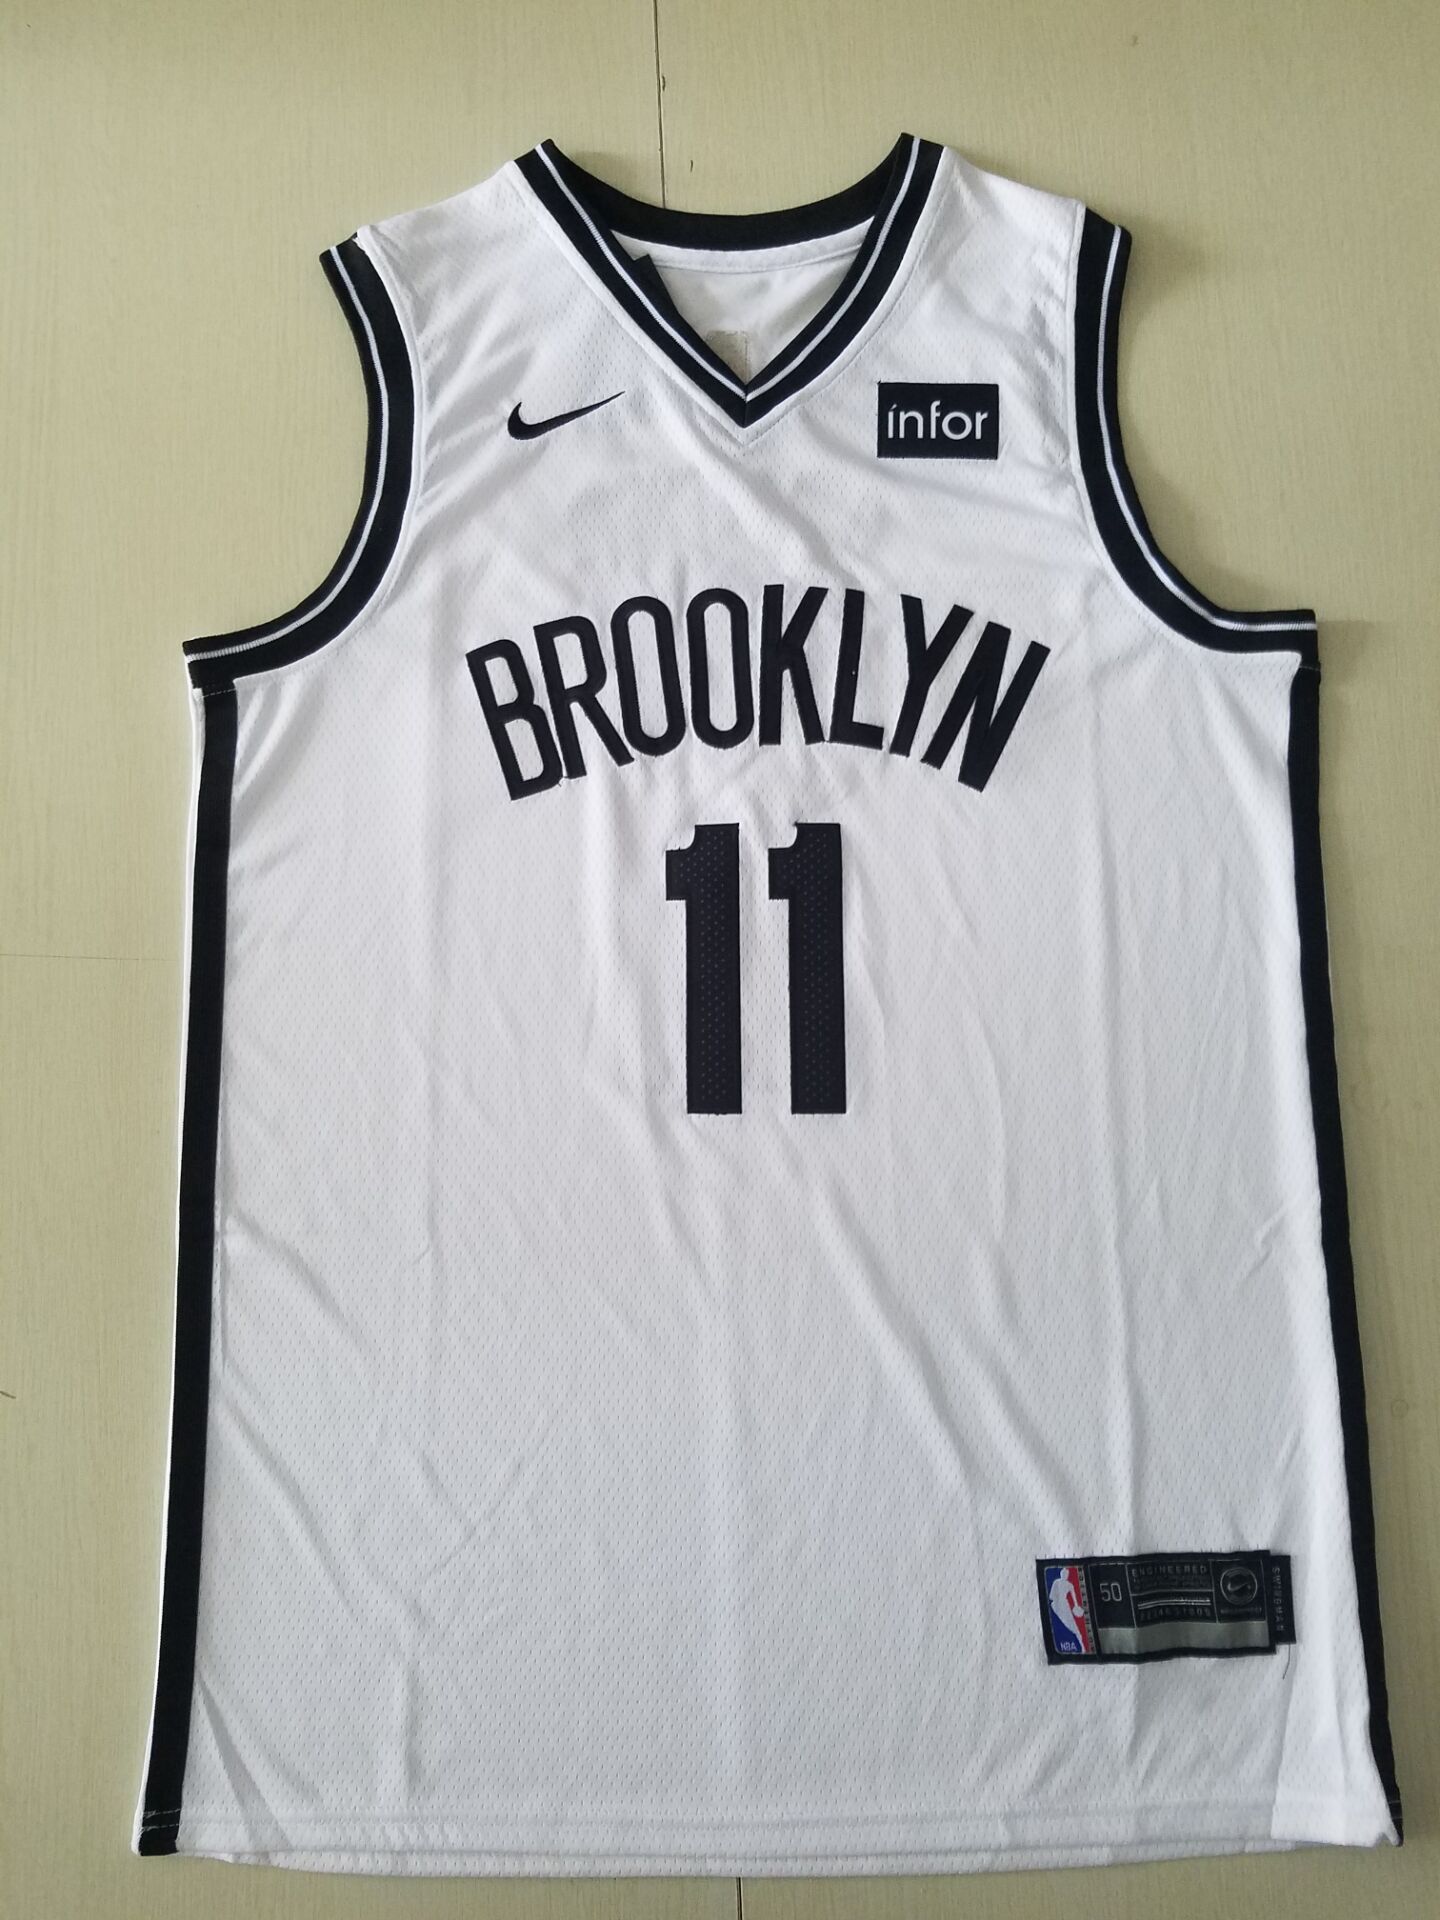 Youth Brooklyn Nets #11 Irving White Nike Game NBA Jerseys